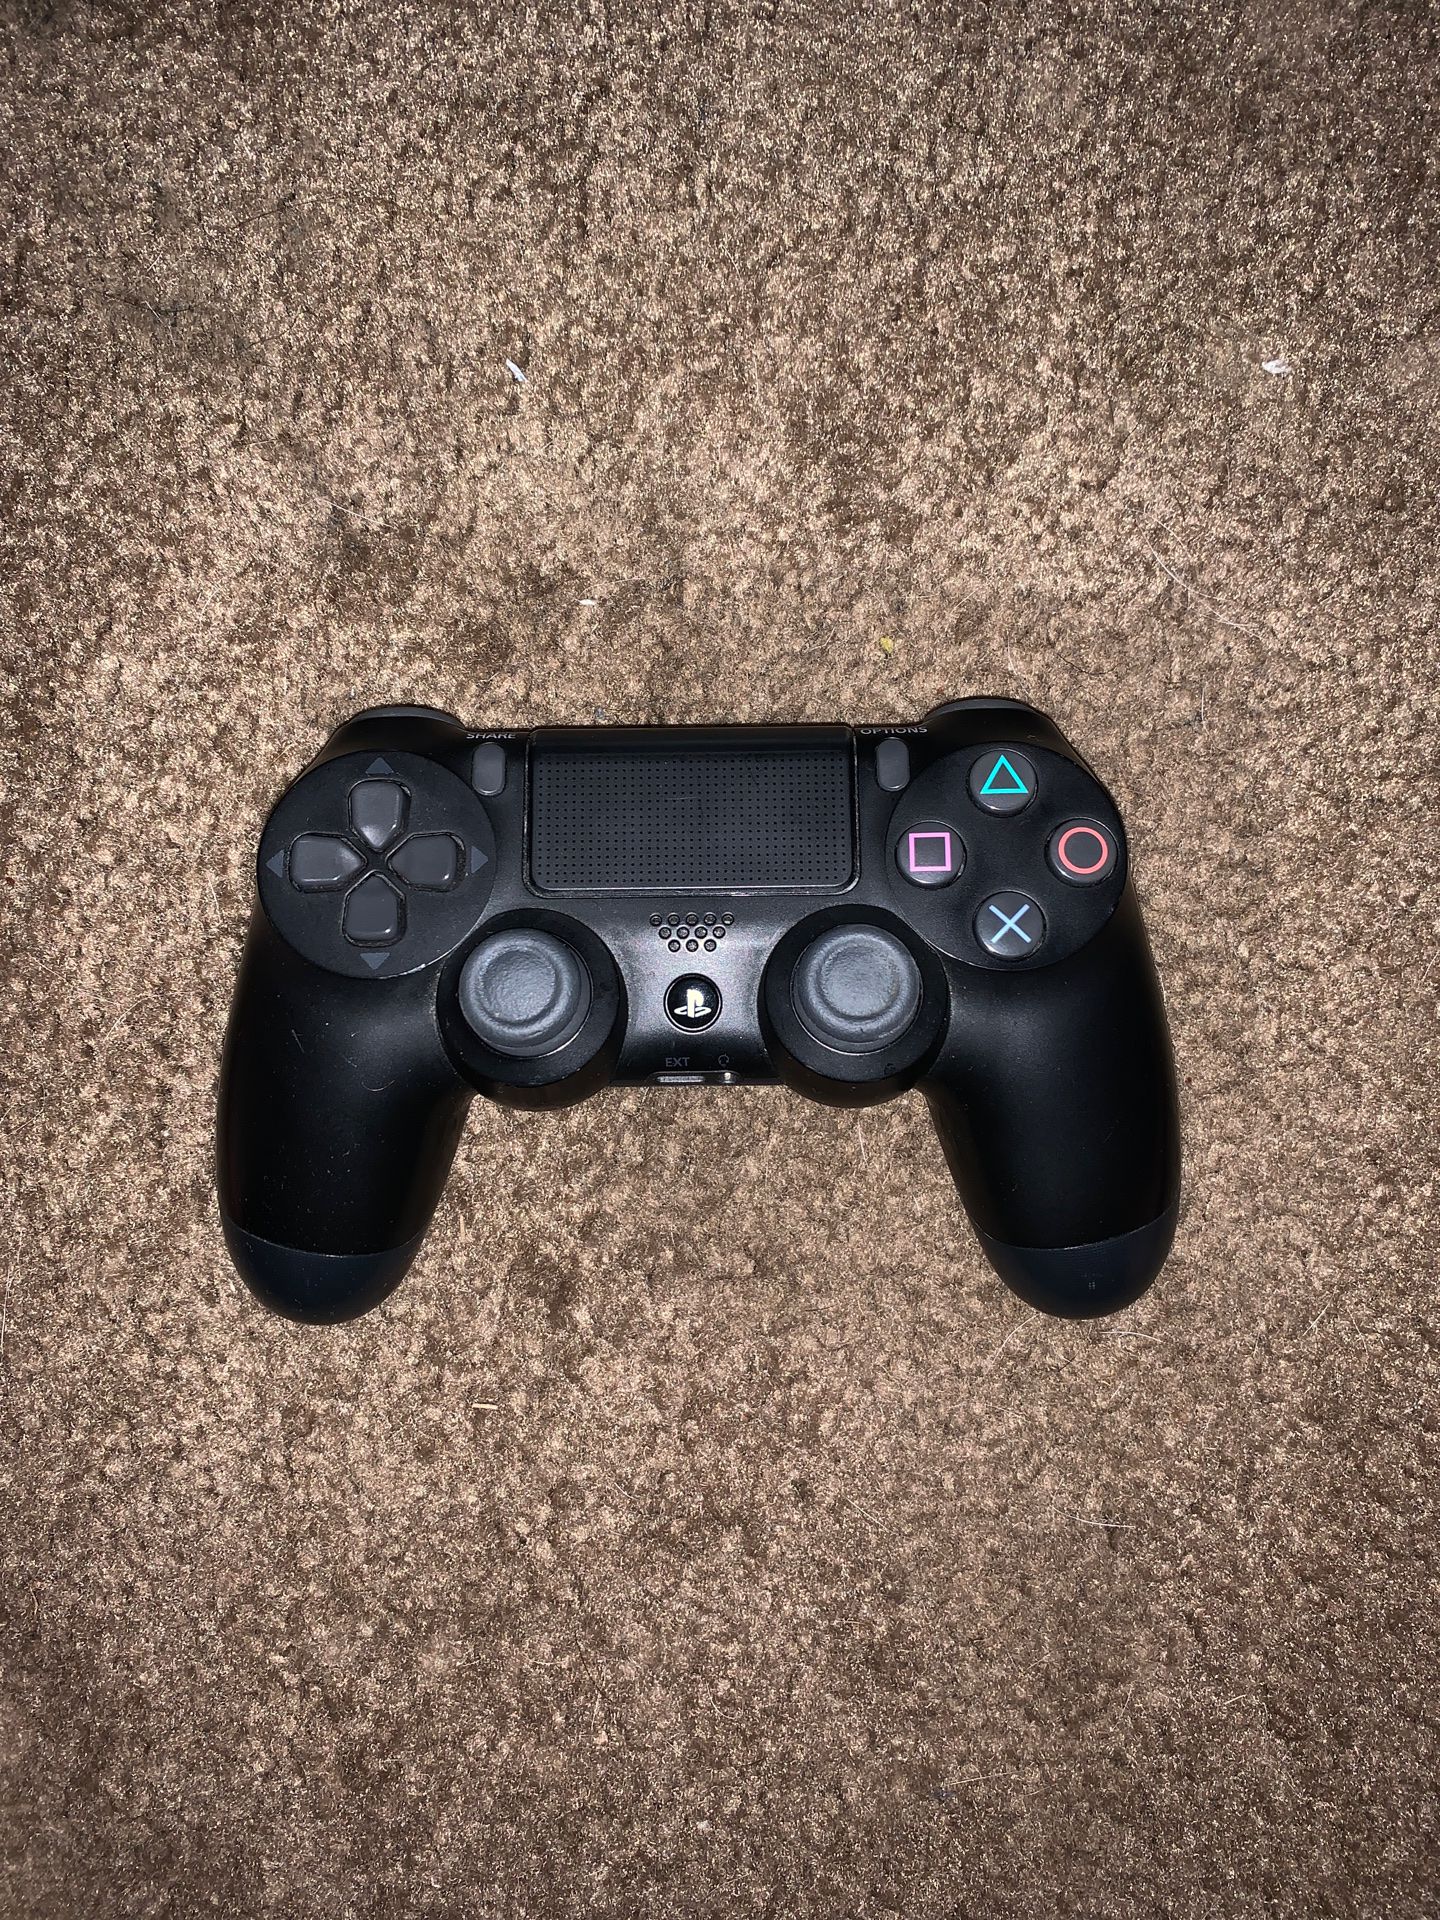 Black PS4 controller